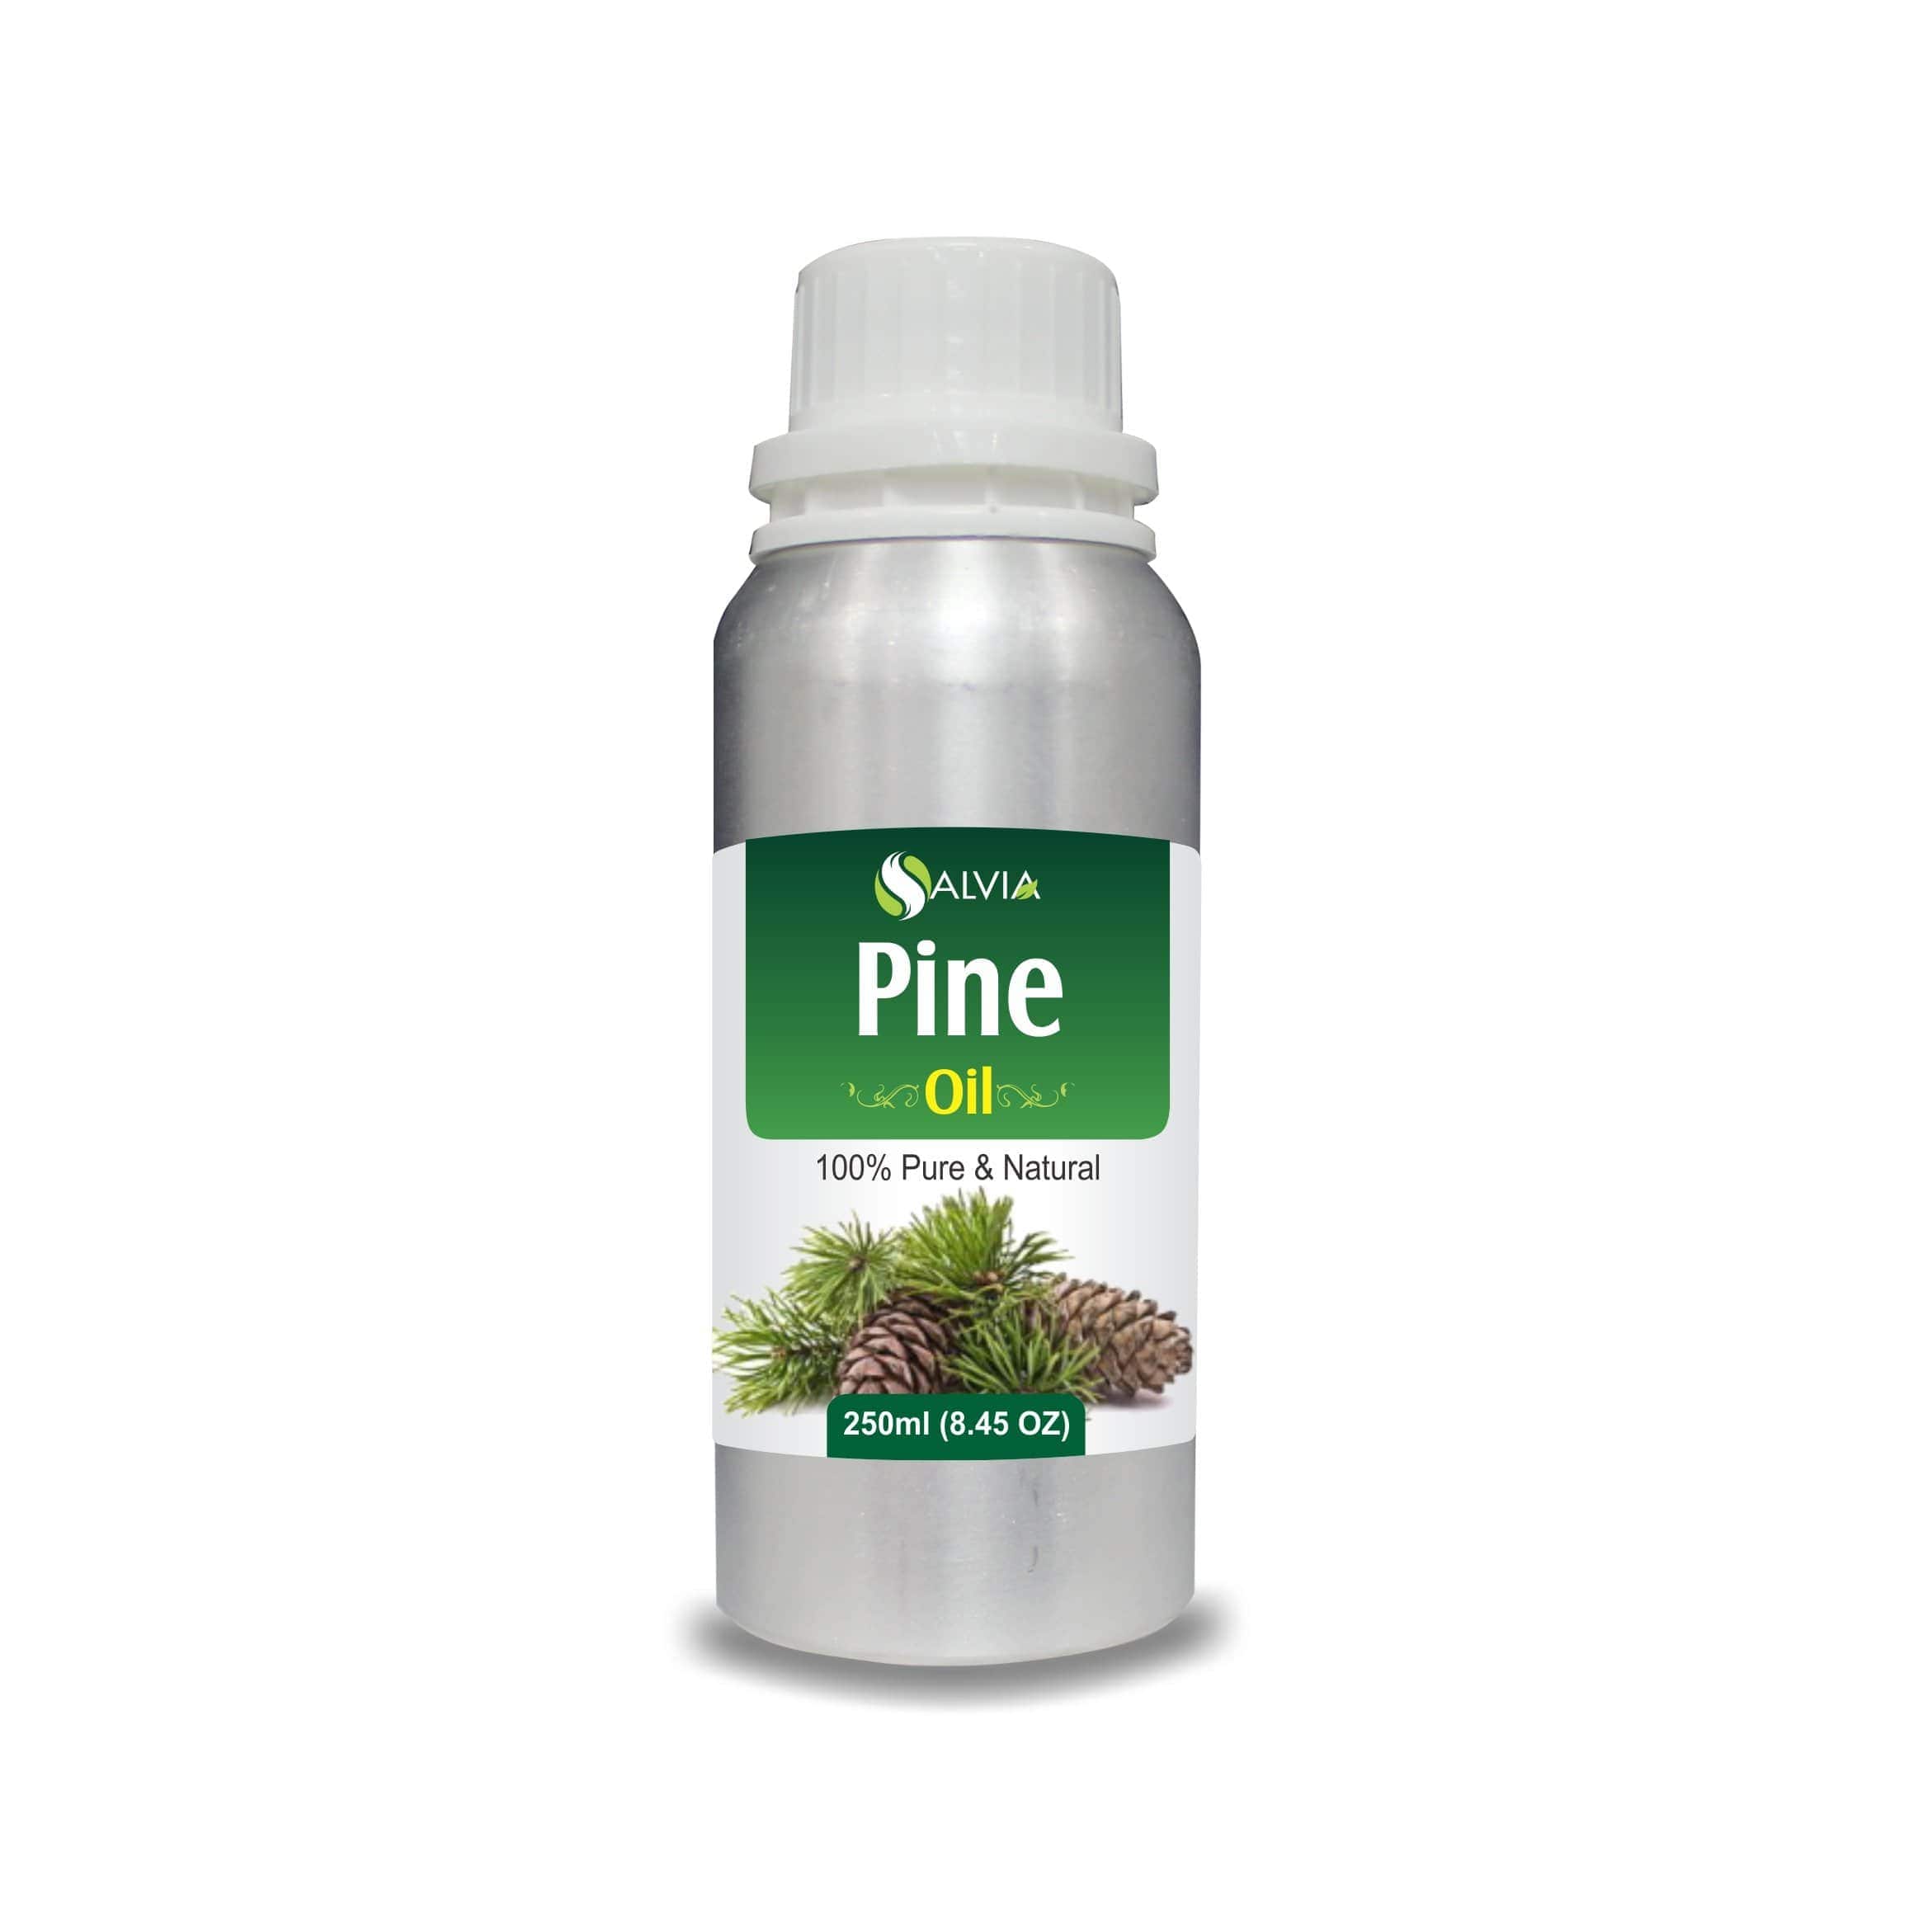 pine oil wholesale price